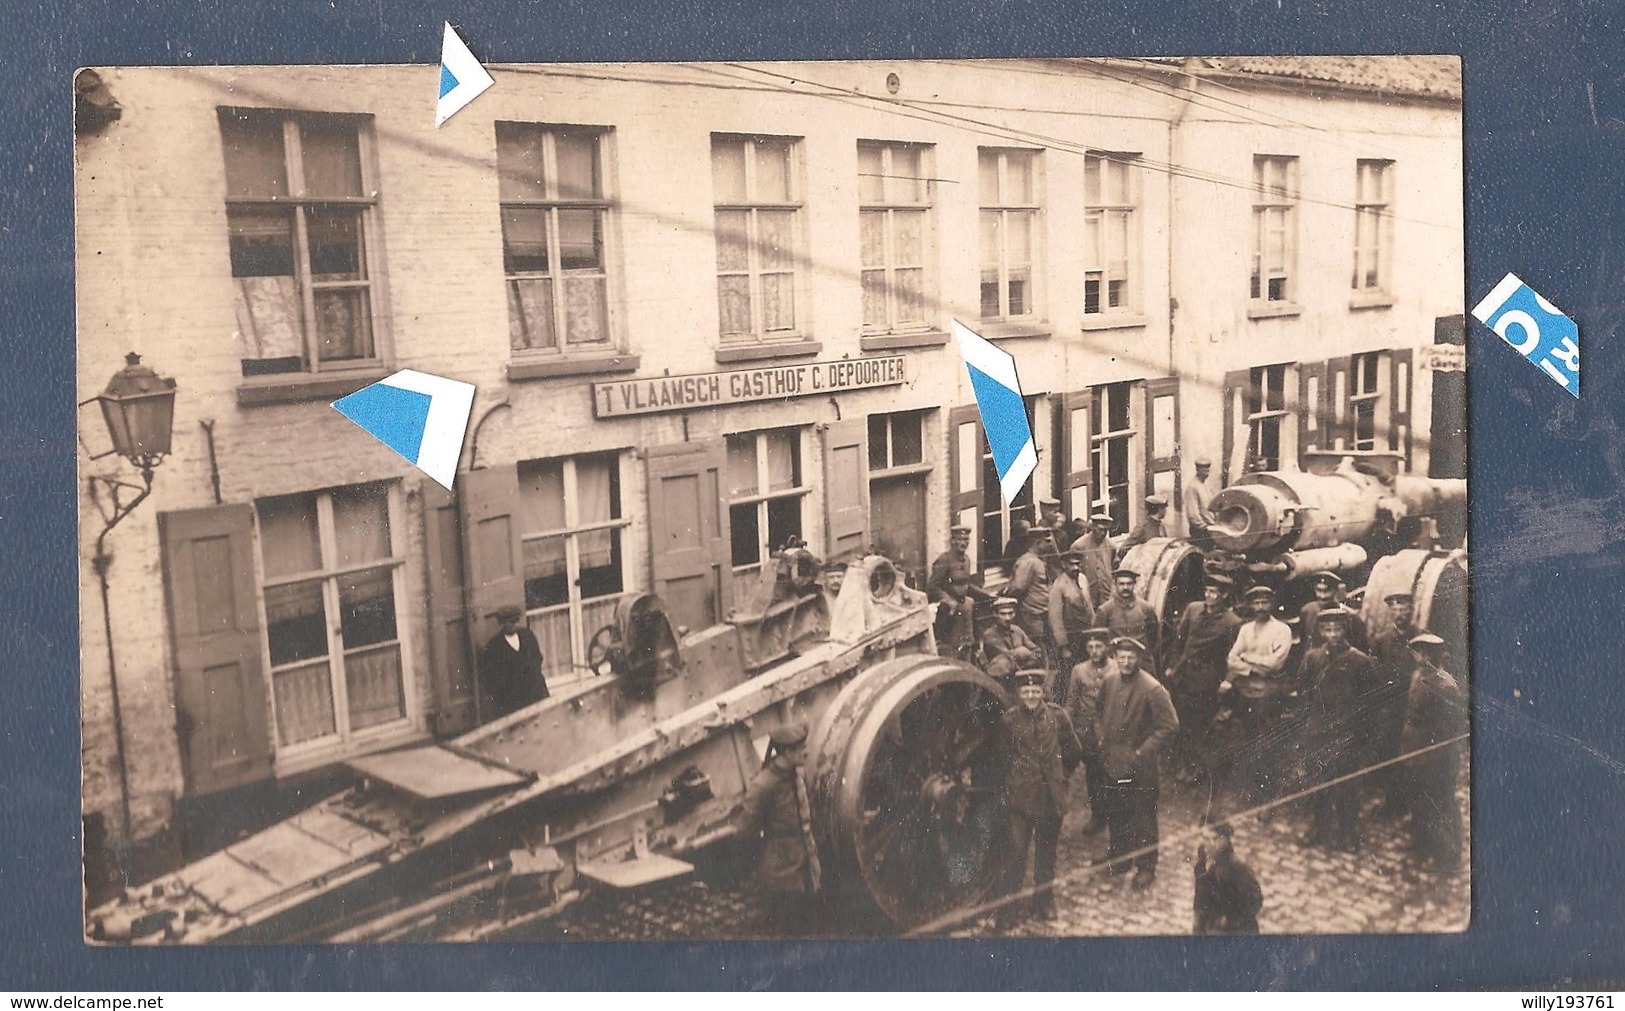 Gistel 1914 1918 Fotokaart Zware Duitse Artillerie Aan Herberg  't Vlaams Gasthof C.Depoorter 23.08.1917 ( Zie Rug) - Gistel